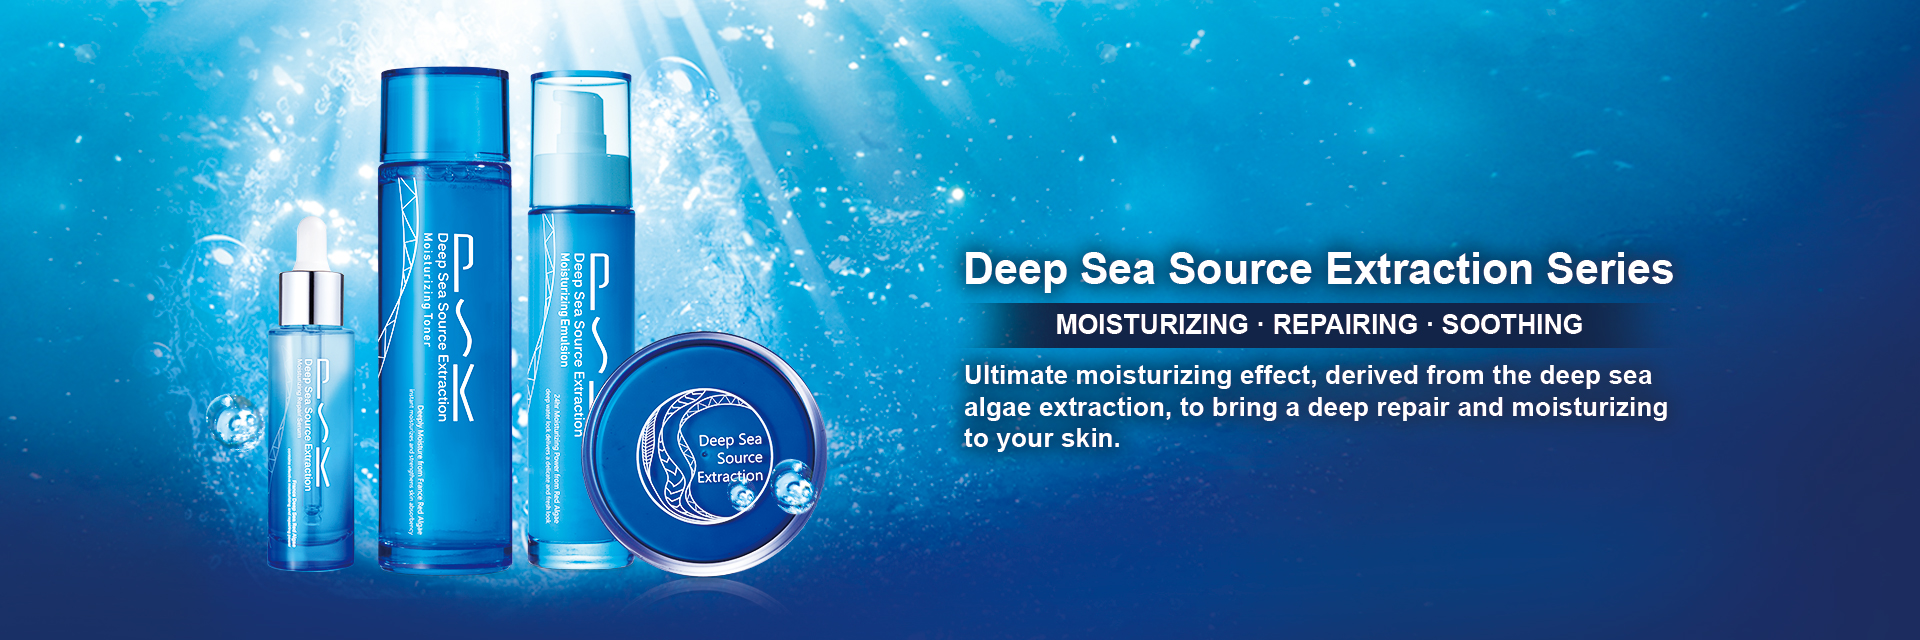 Deep sea Source Extraction Series